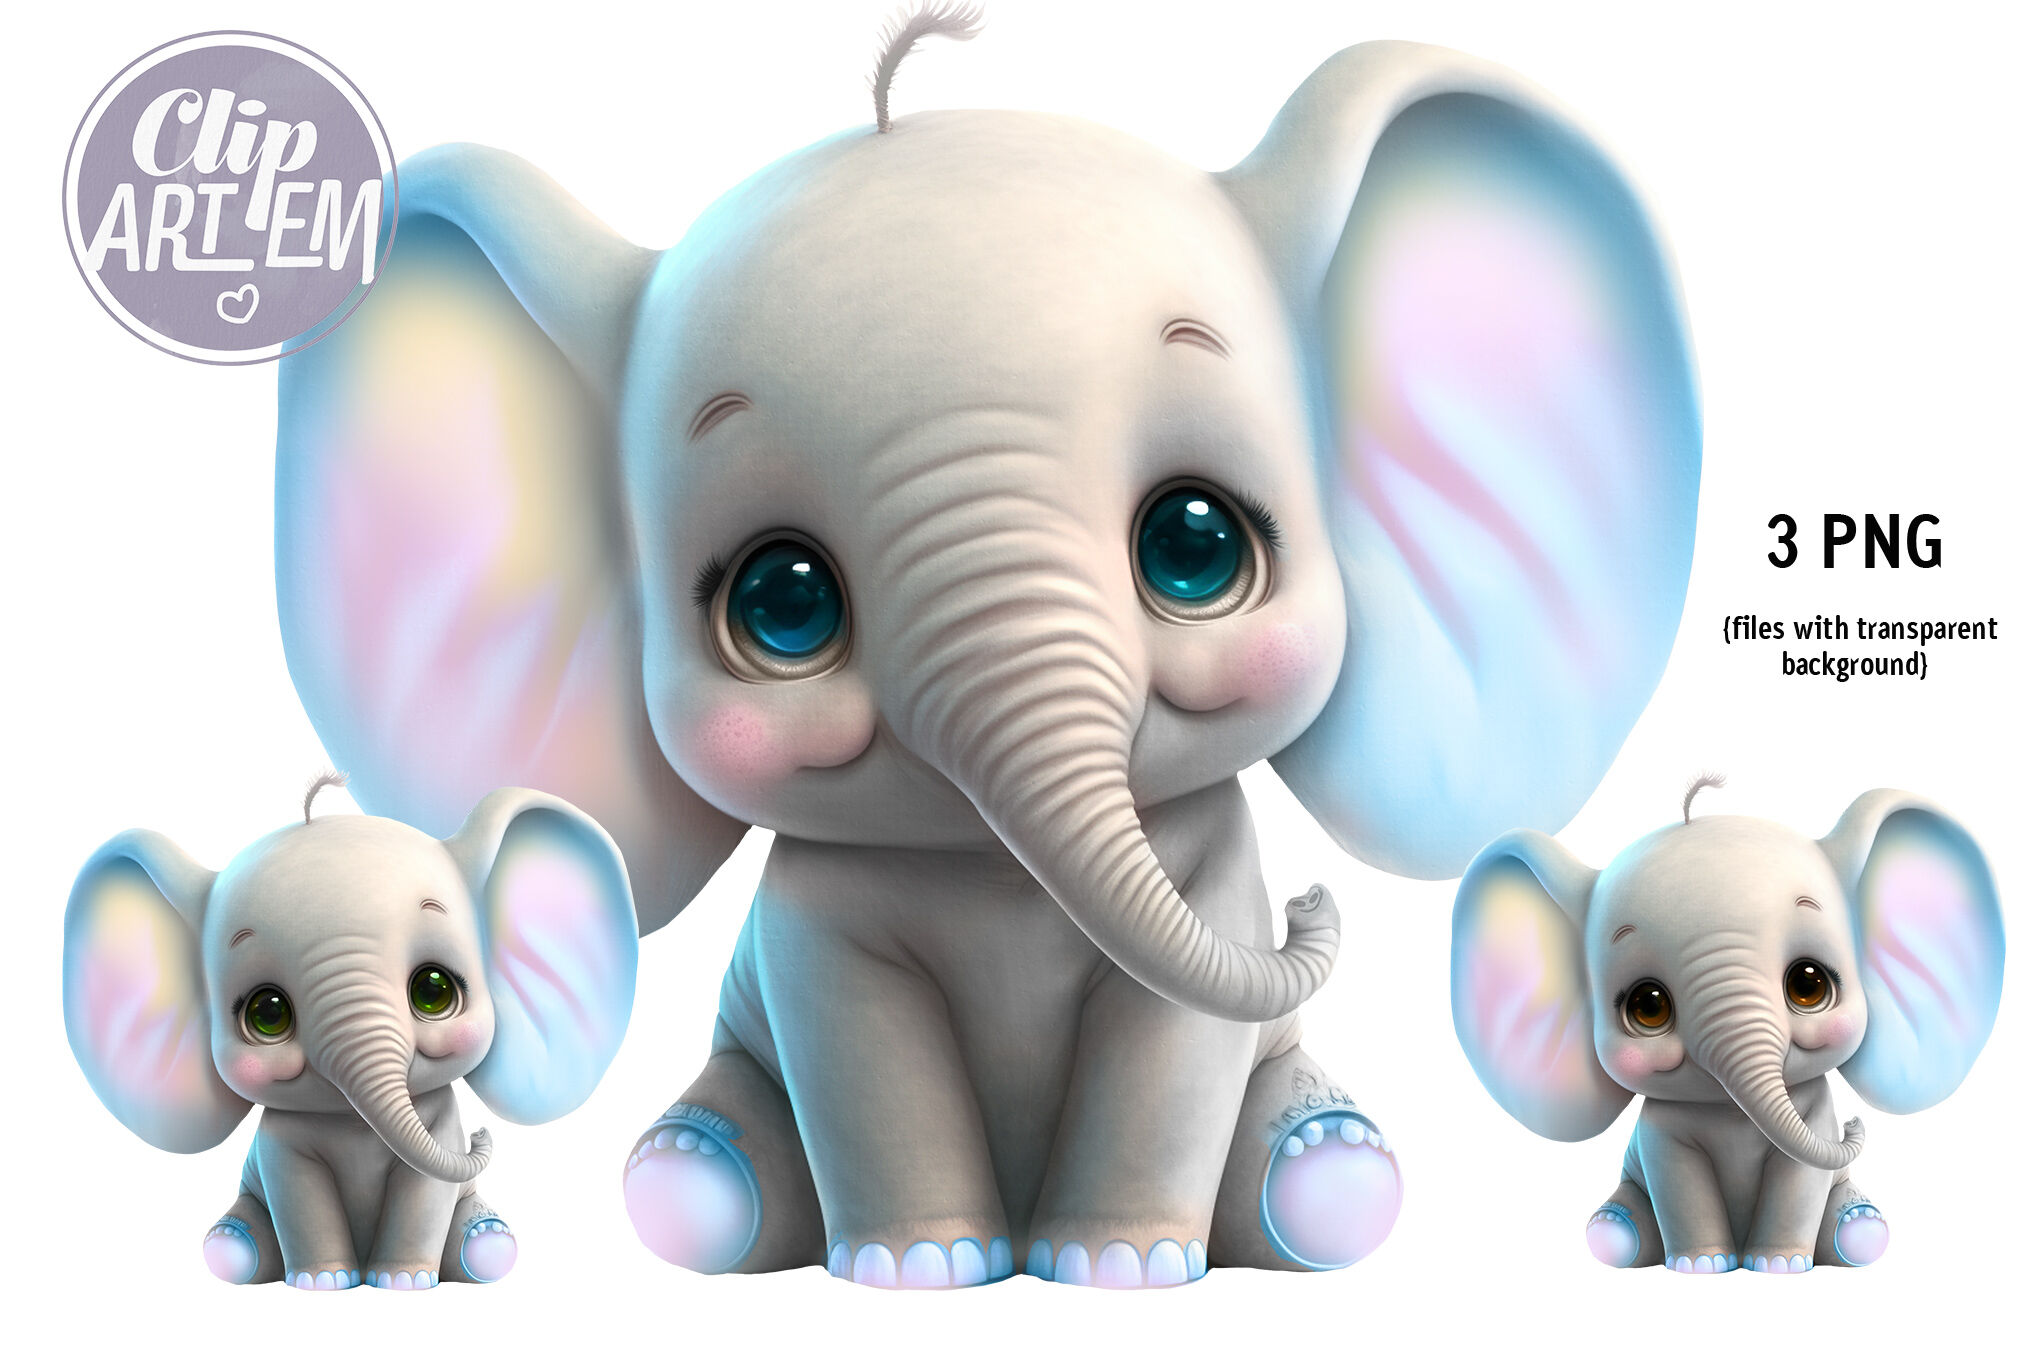 pink animated baby elephant